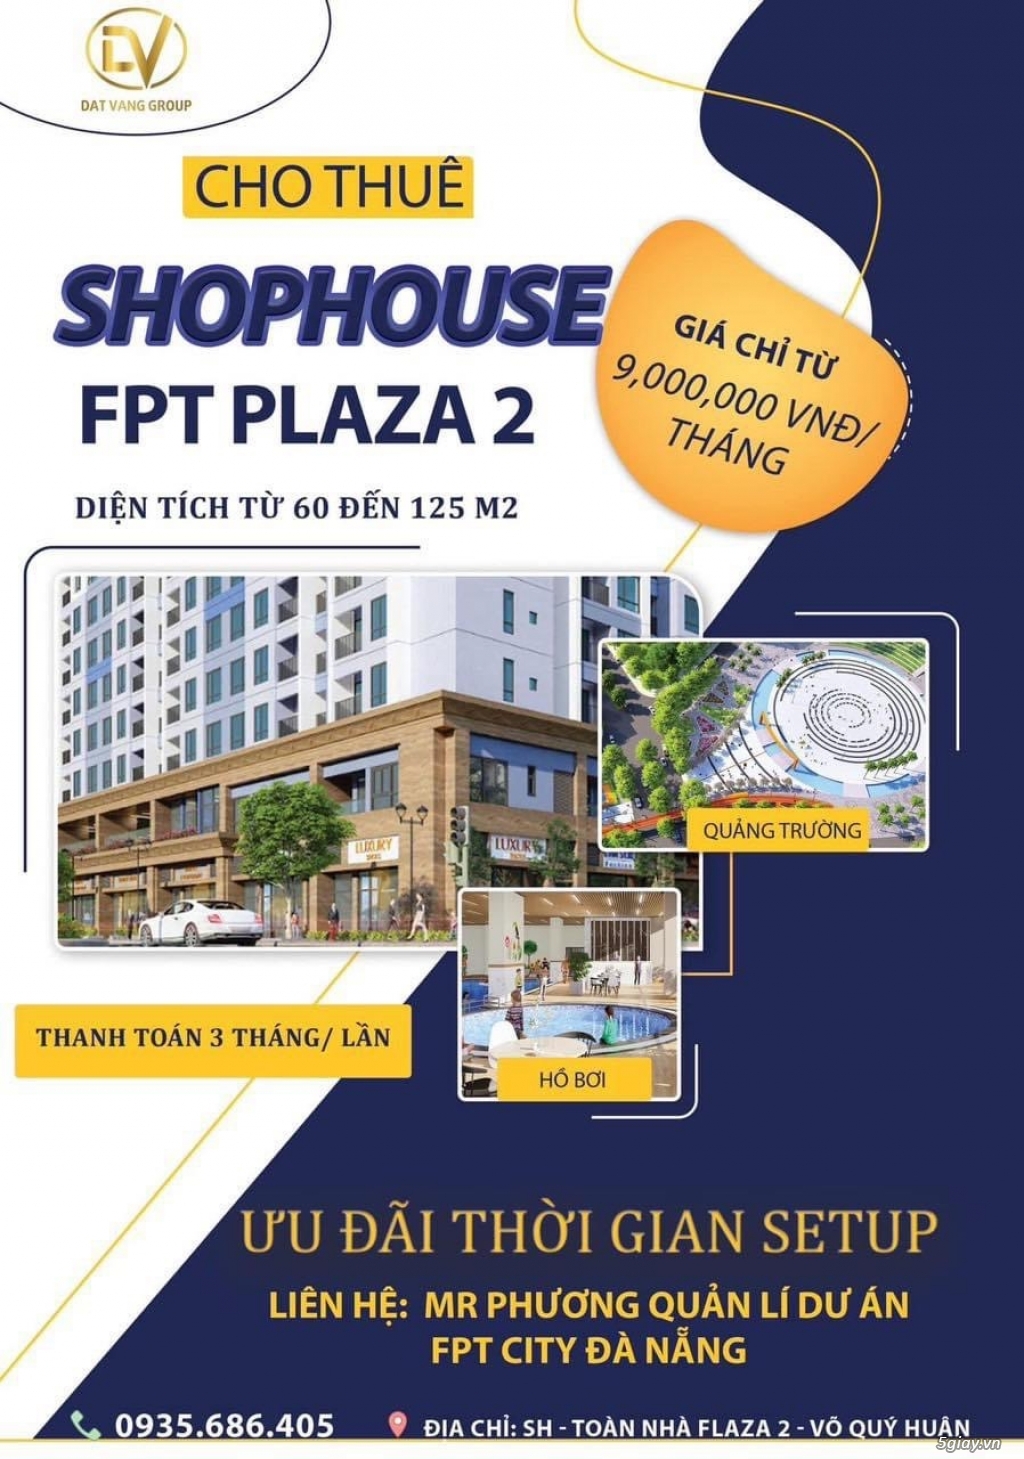 Cho thuê shophouse FPT